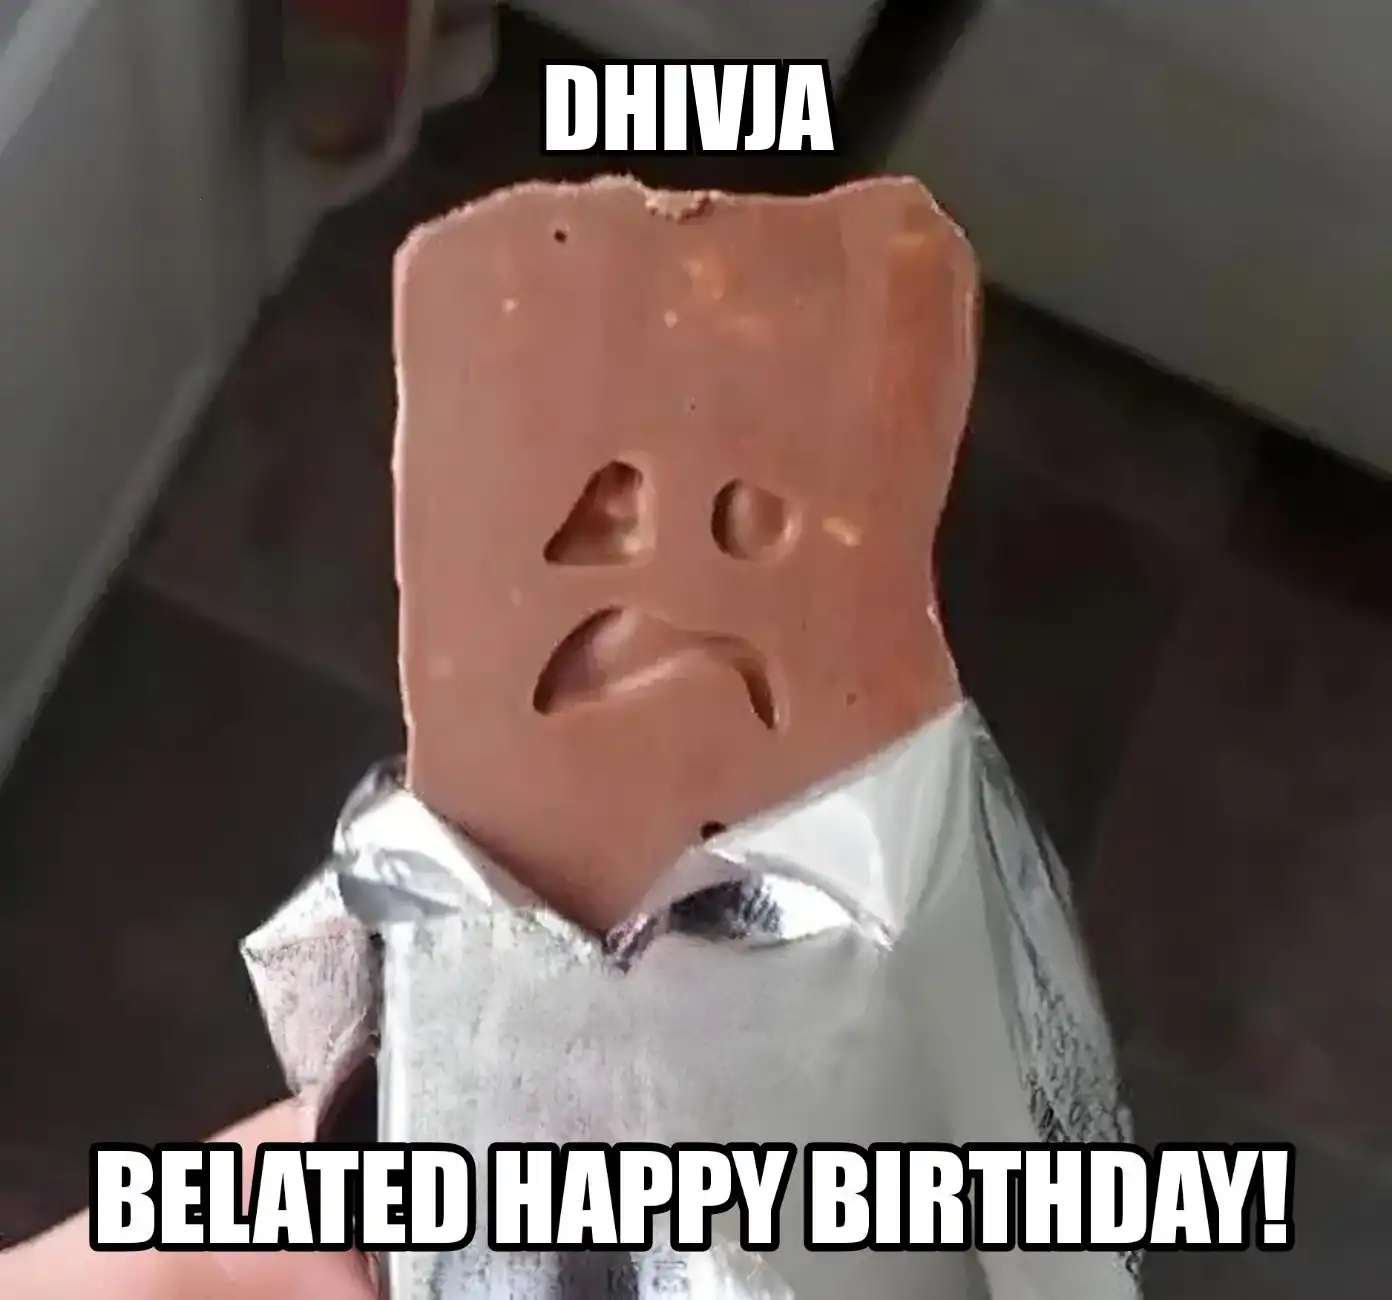 Happy Birthday Dhivja Belated Happy Birthday Meme